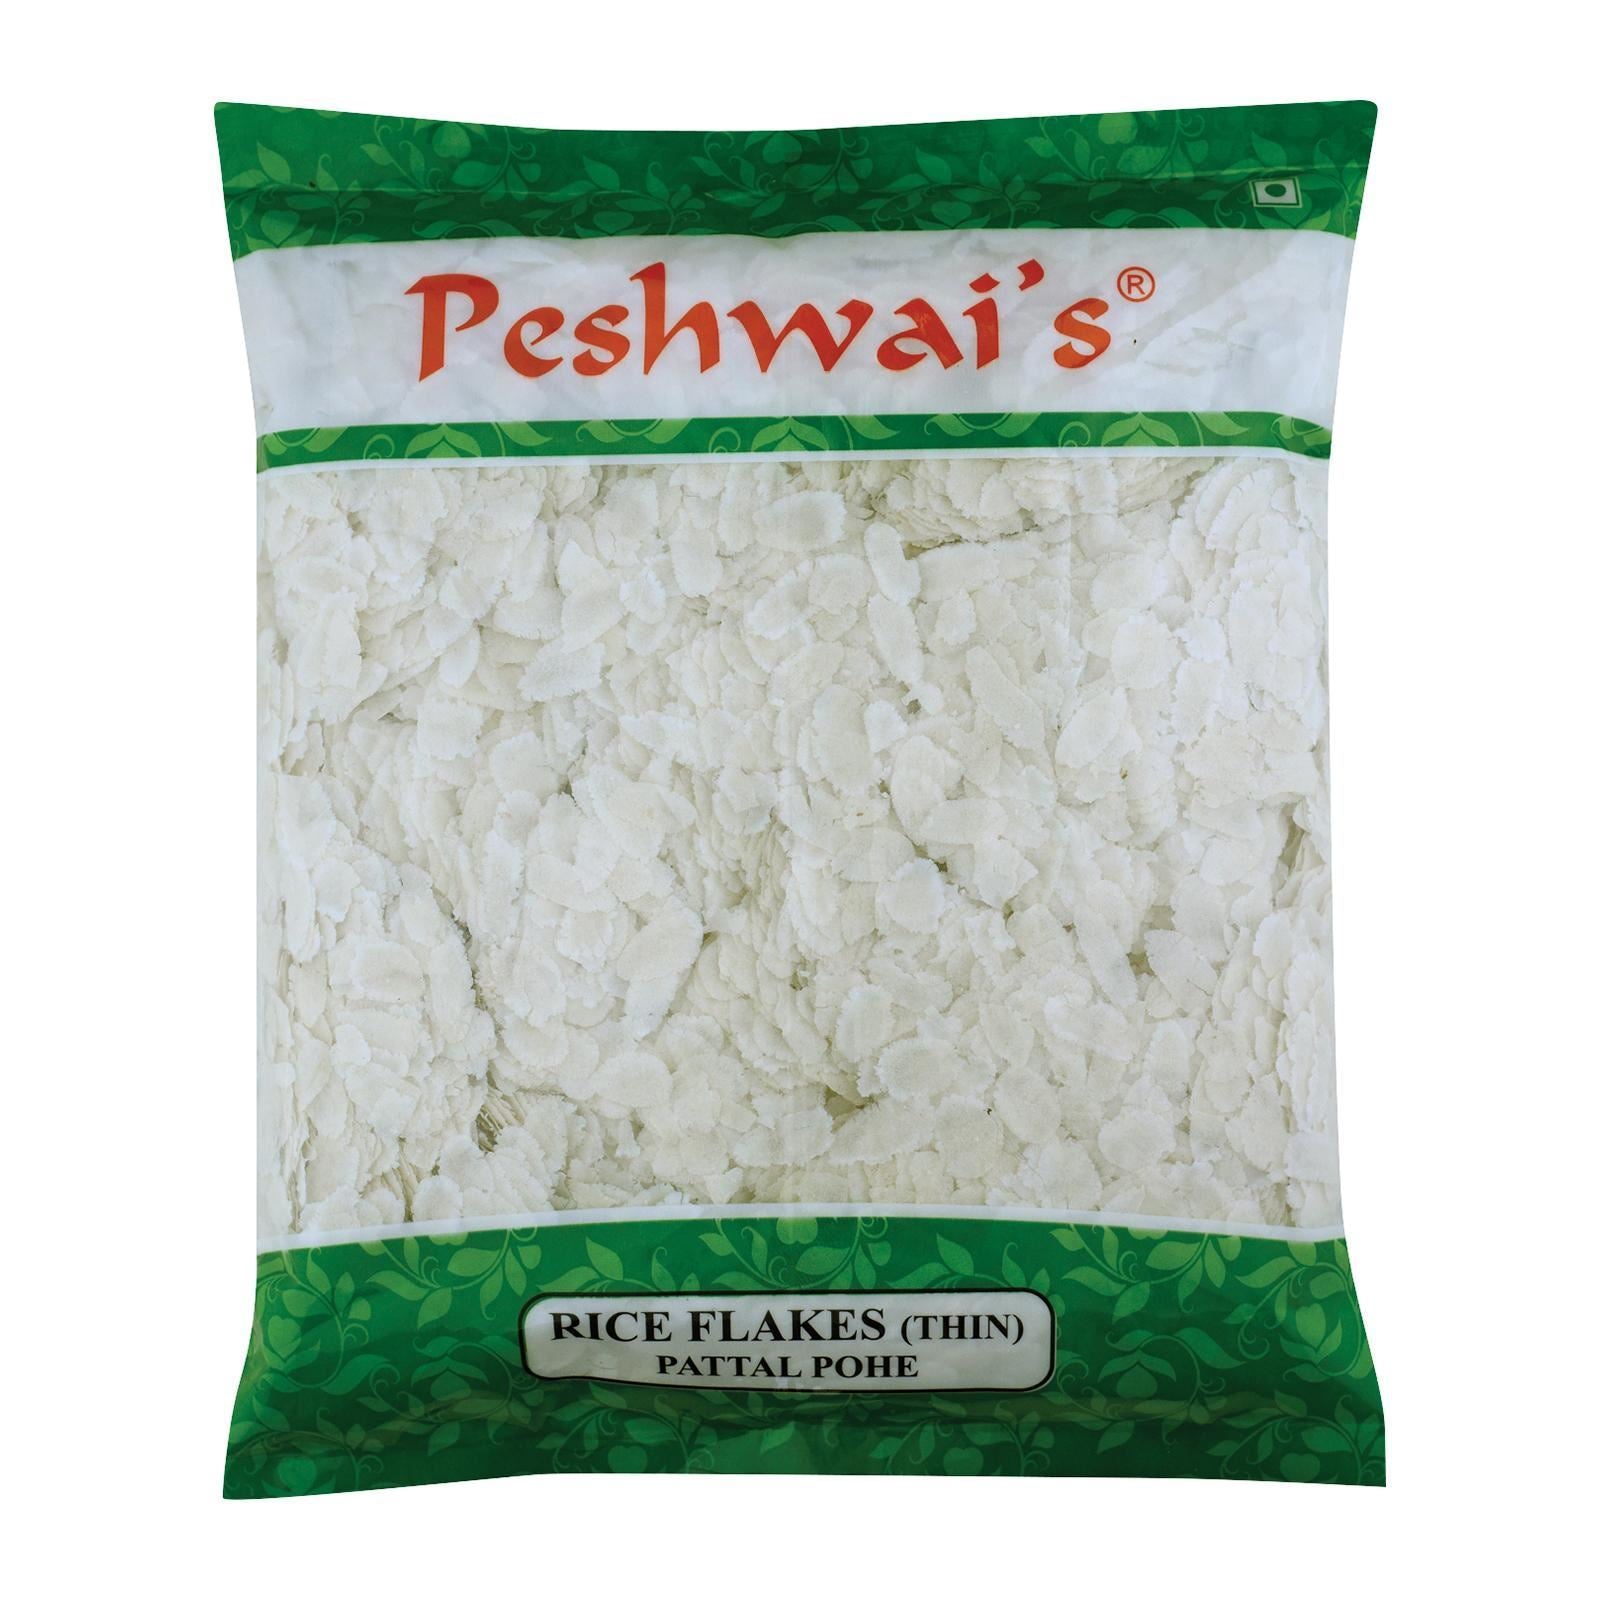 Peshwai's Rice Flakes Thin (Pattal Poha / Aval)